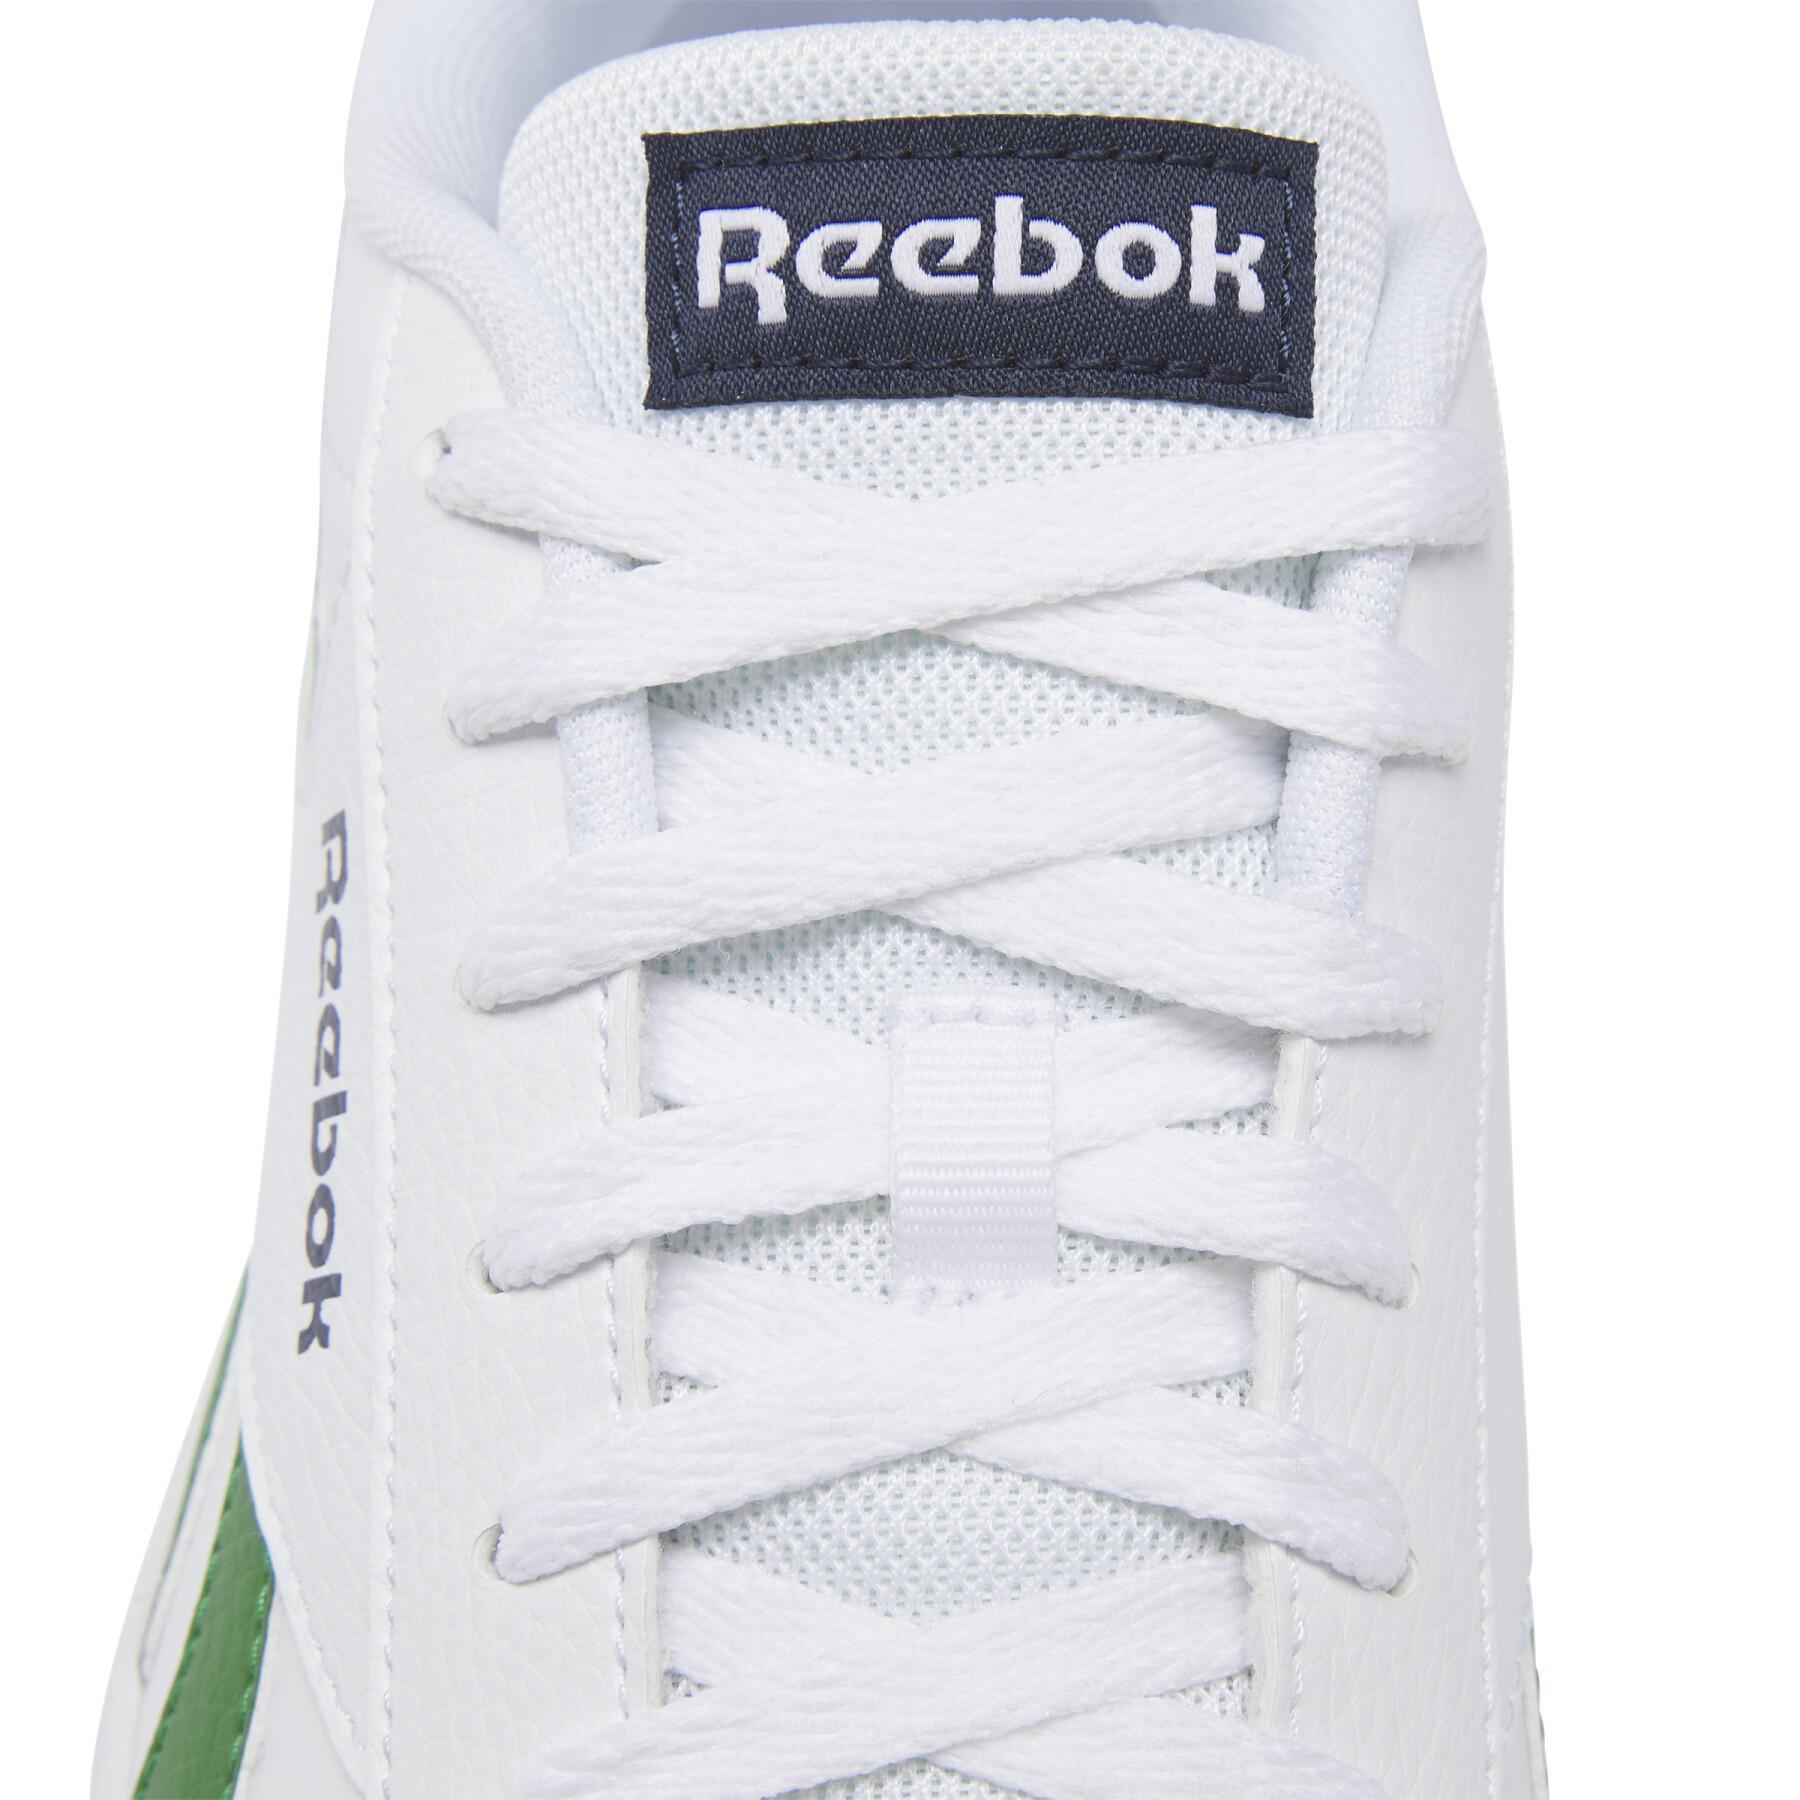 Baskets Reebok Royal Complete 3.0 Low